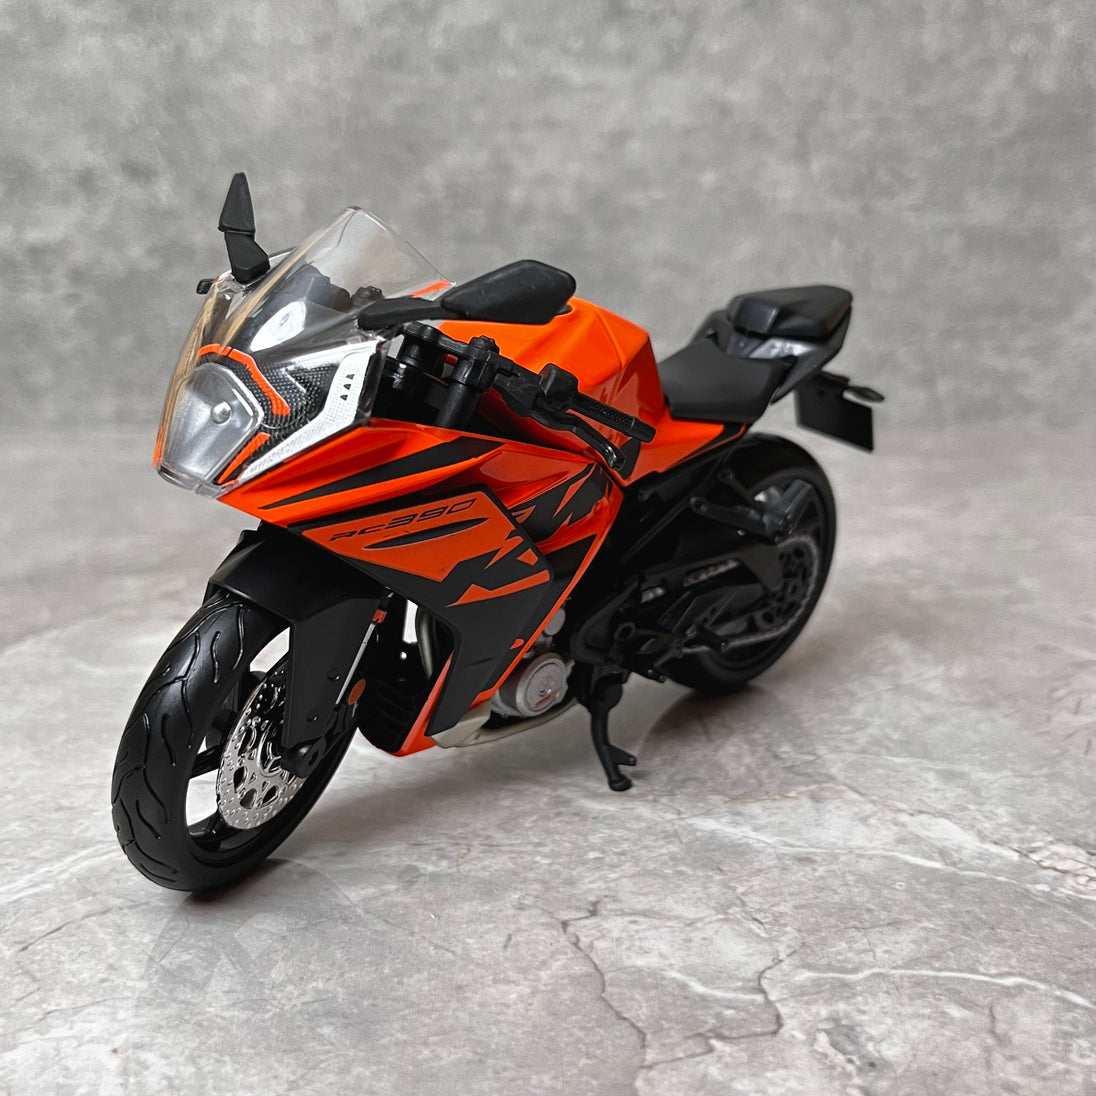 KTM RC390 Diecast Bike 1:12 Motorcycle Model By Maisto